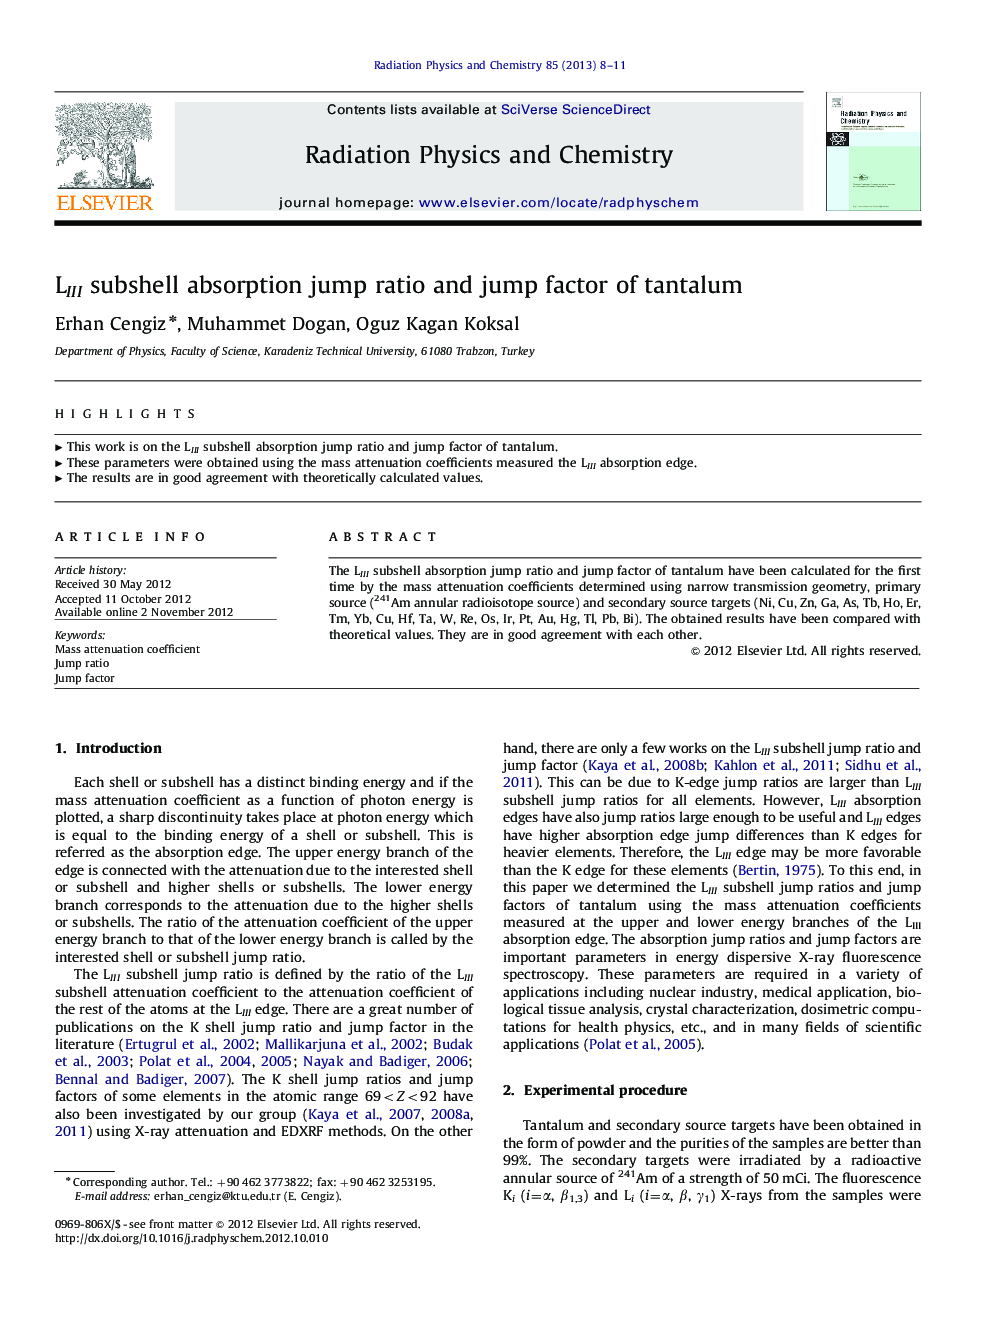 LIII subshell absorption jump ratio and jump factor of tantalum